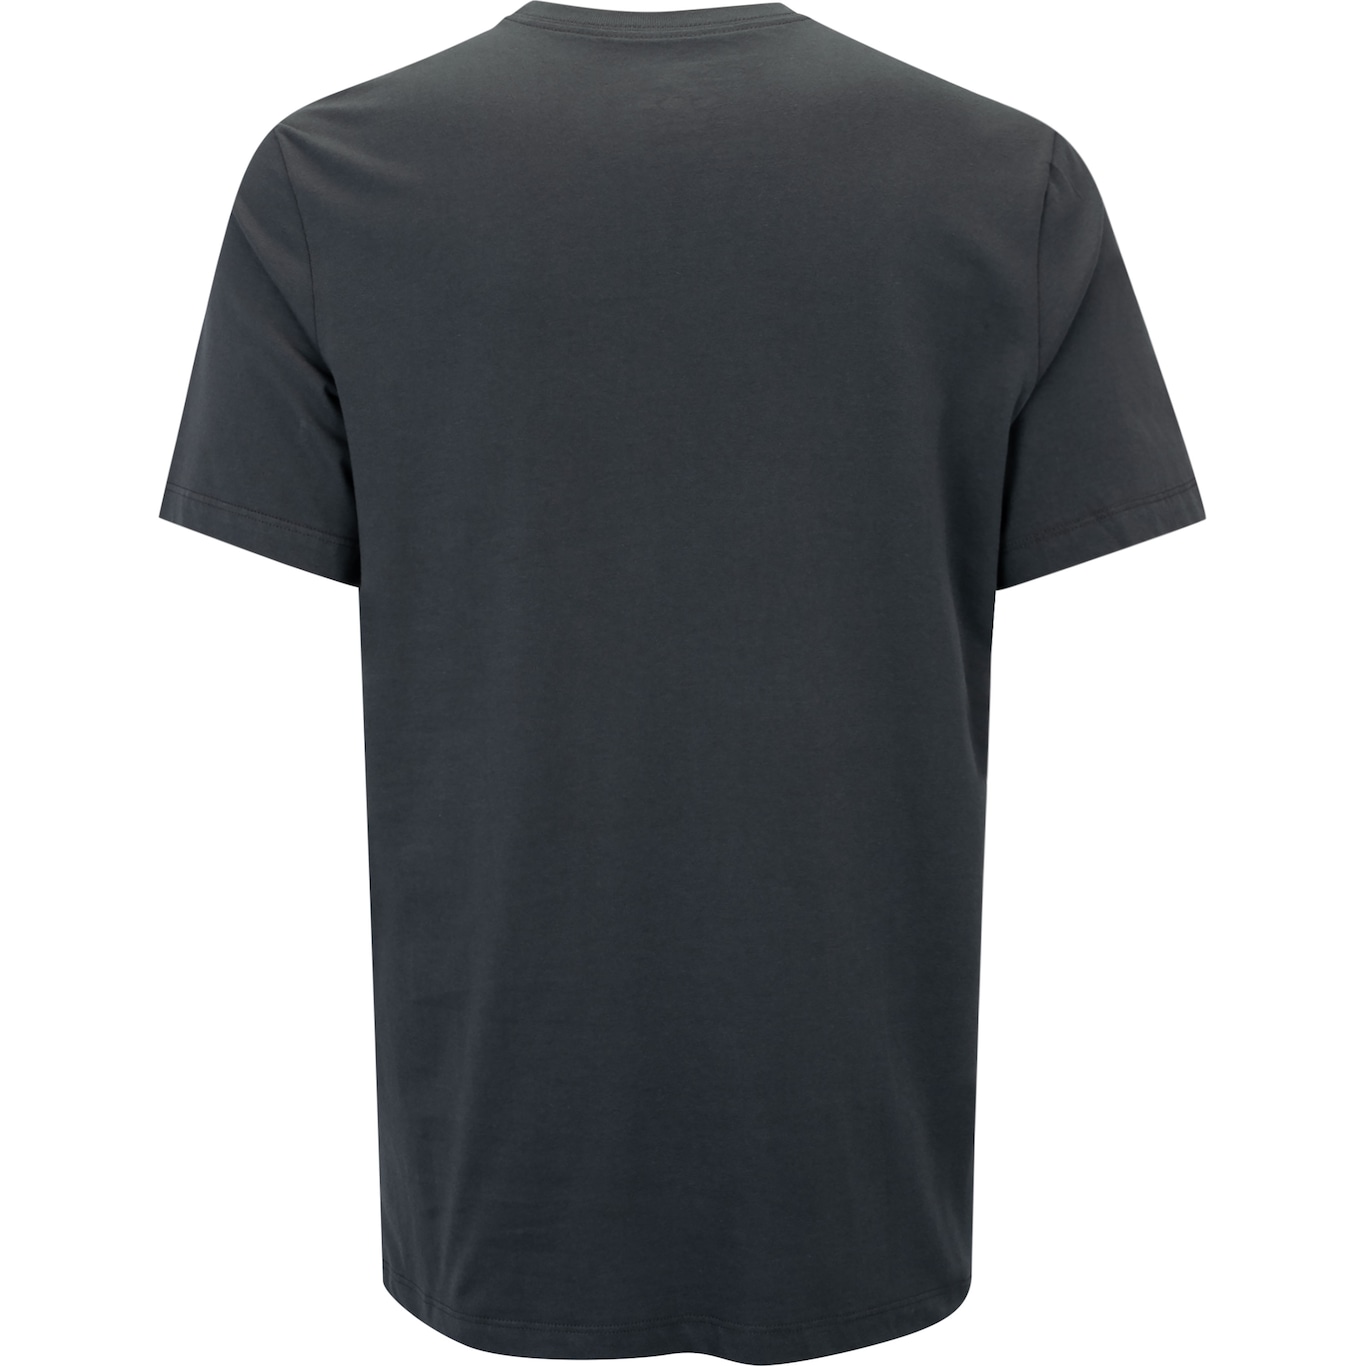  TSLA - Paquete de 1 o 2 camisetas térmicas de